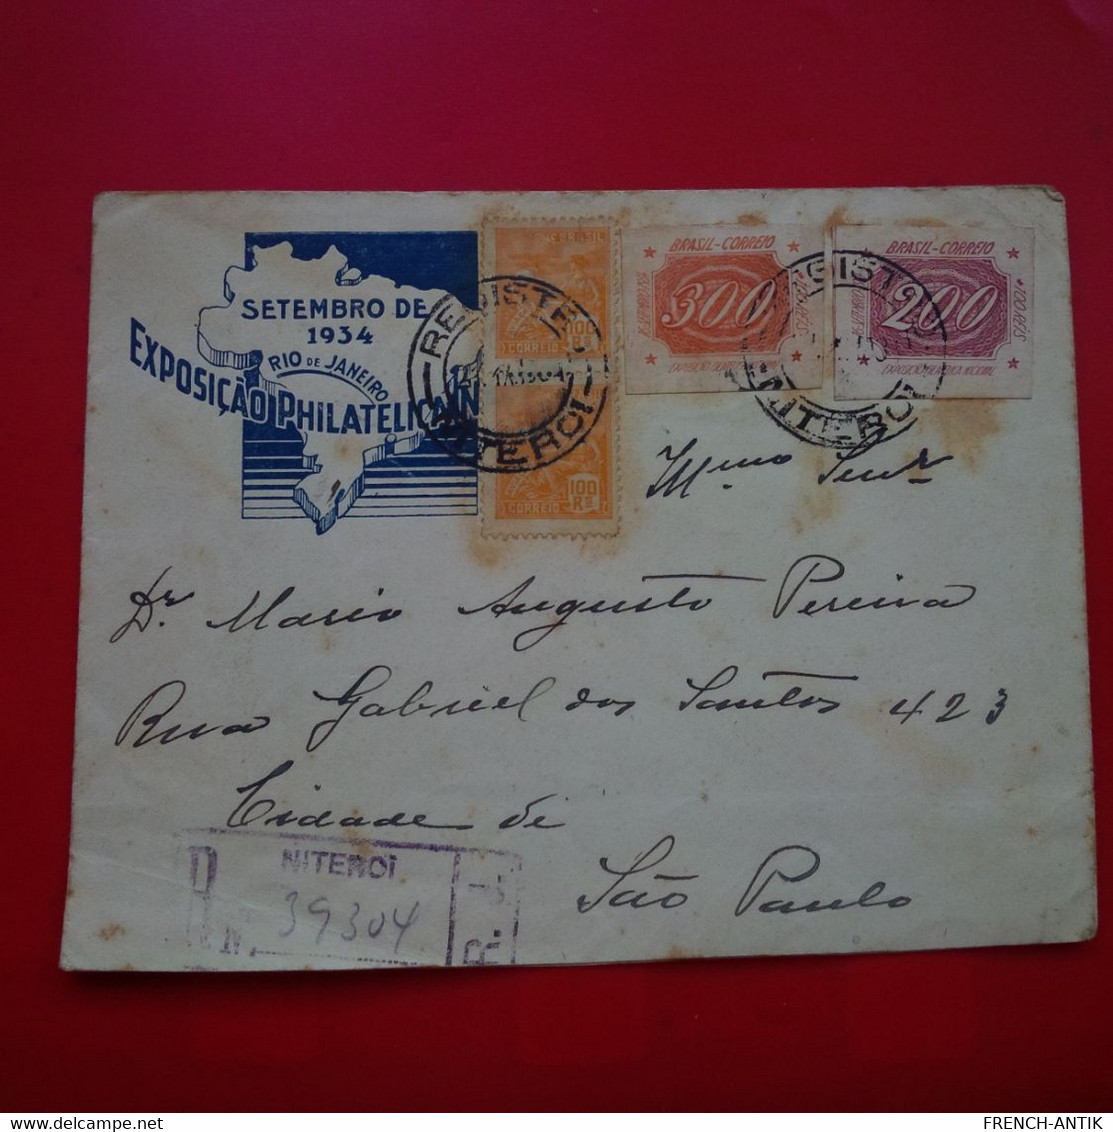 LETTRE RECOMMANDE NITEROI RIO DE JANEIRO EXPOSICAO PHILALIQUE 1934 - Briefe U. Dokumente